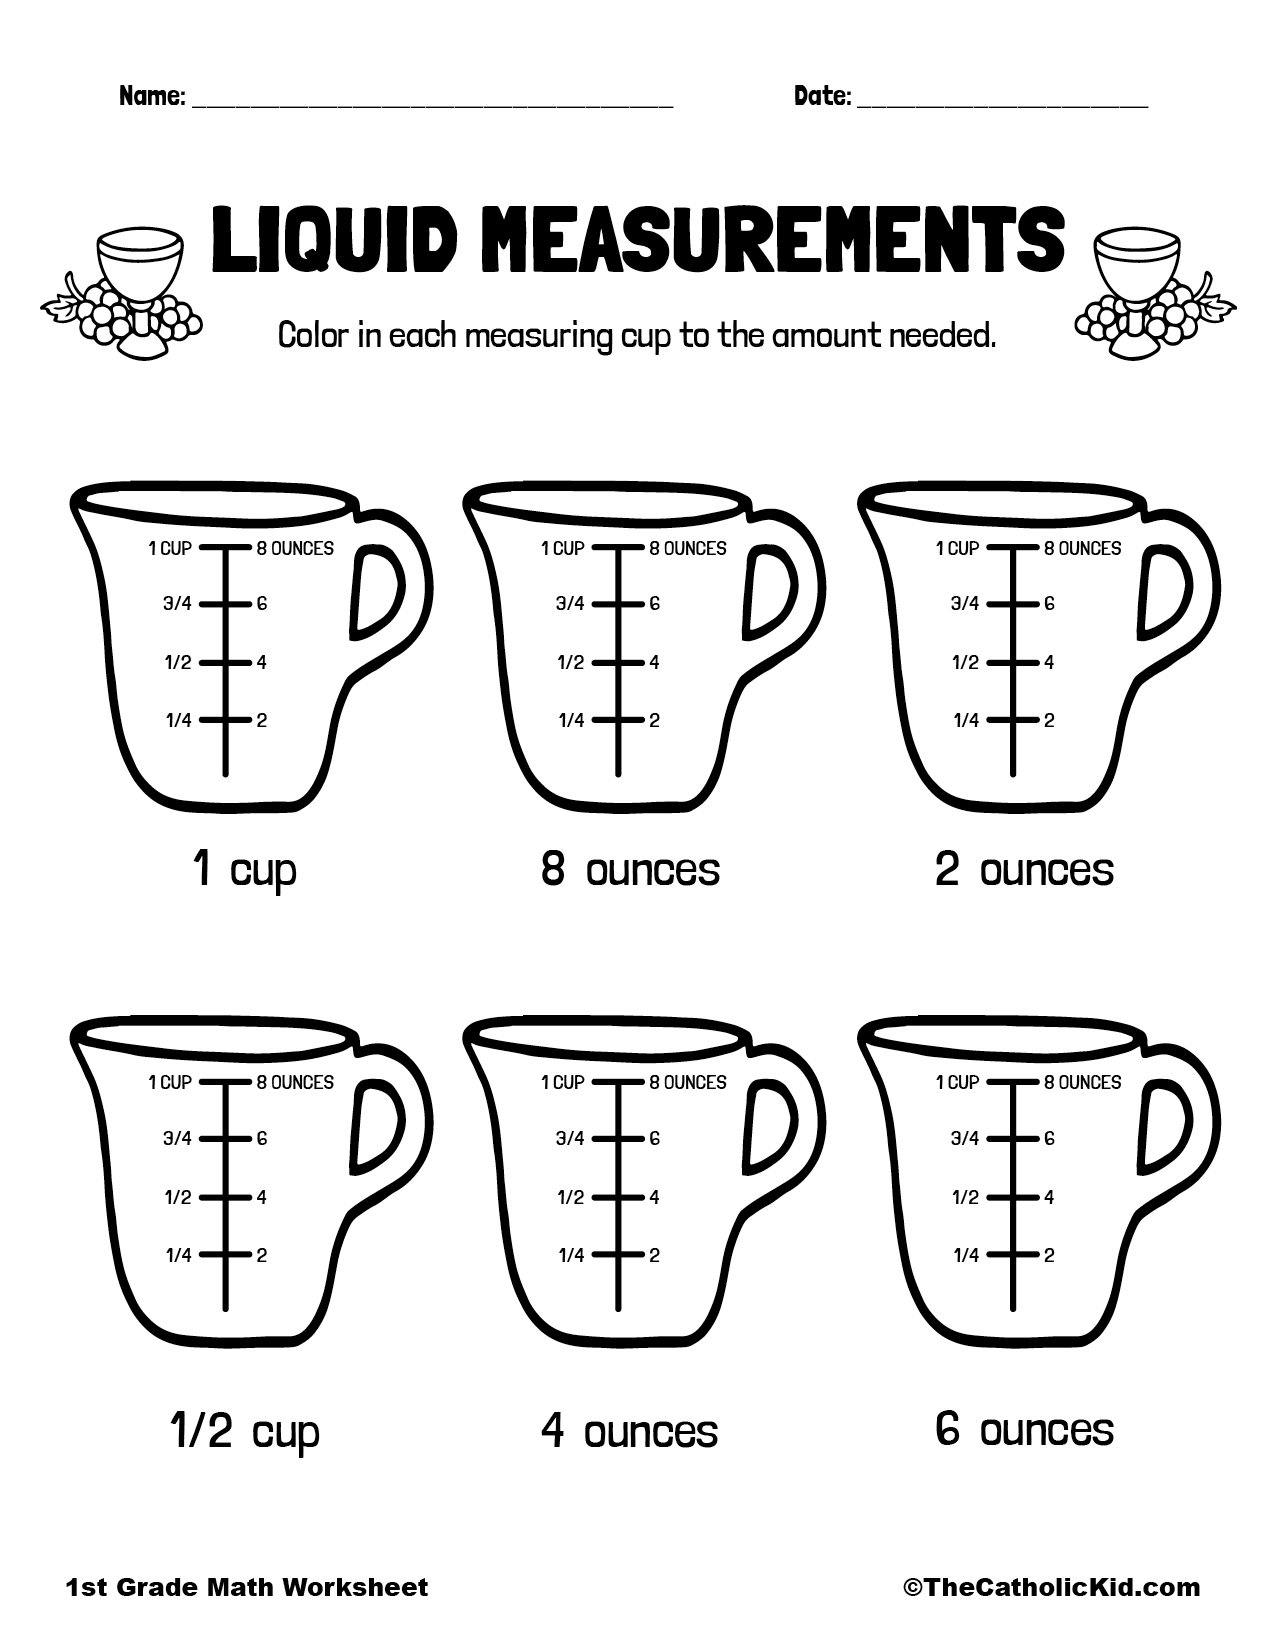 Catholic themed liquid measurements worksheet